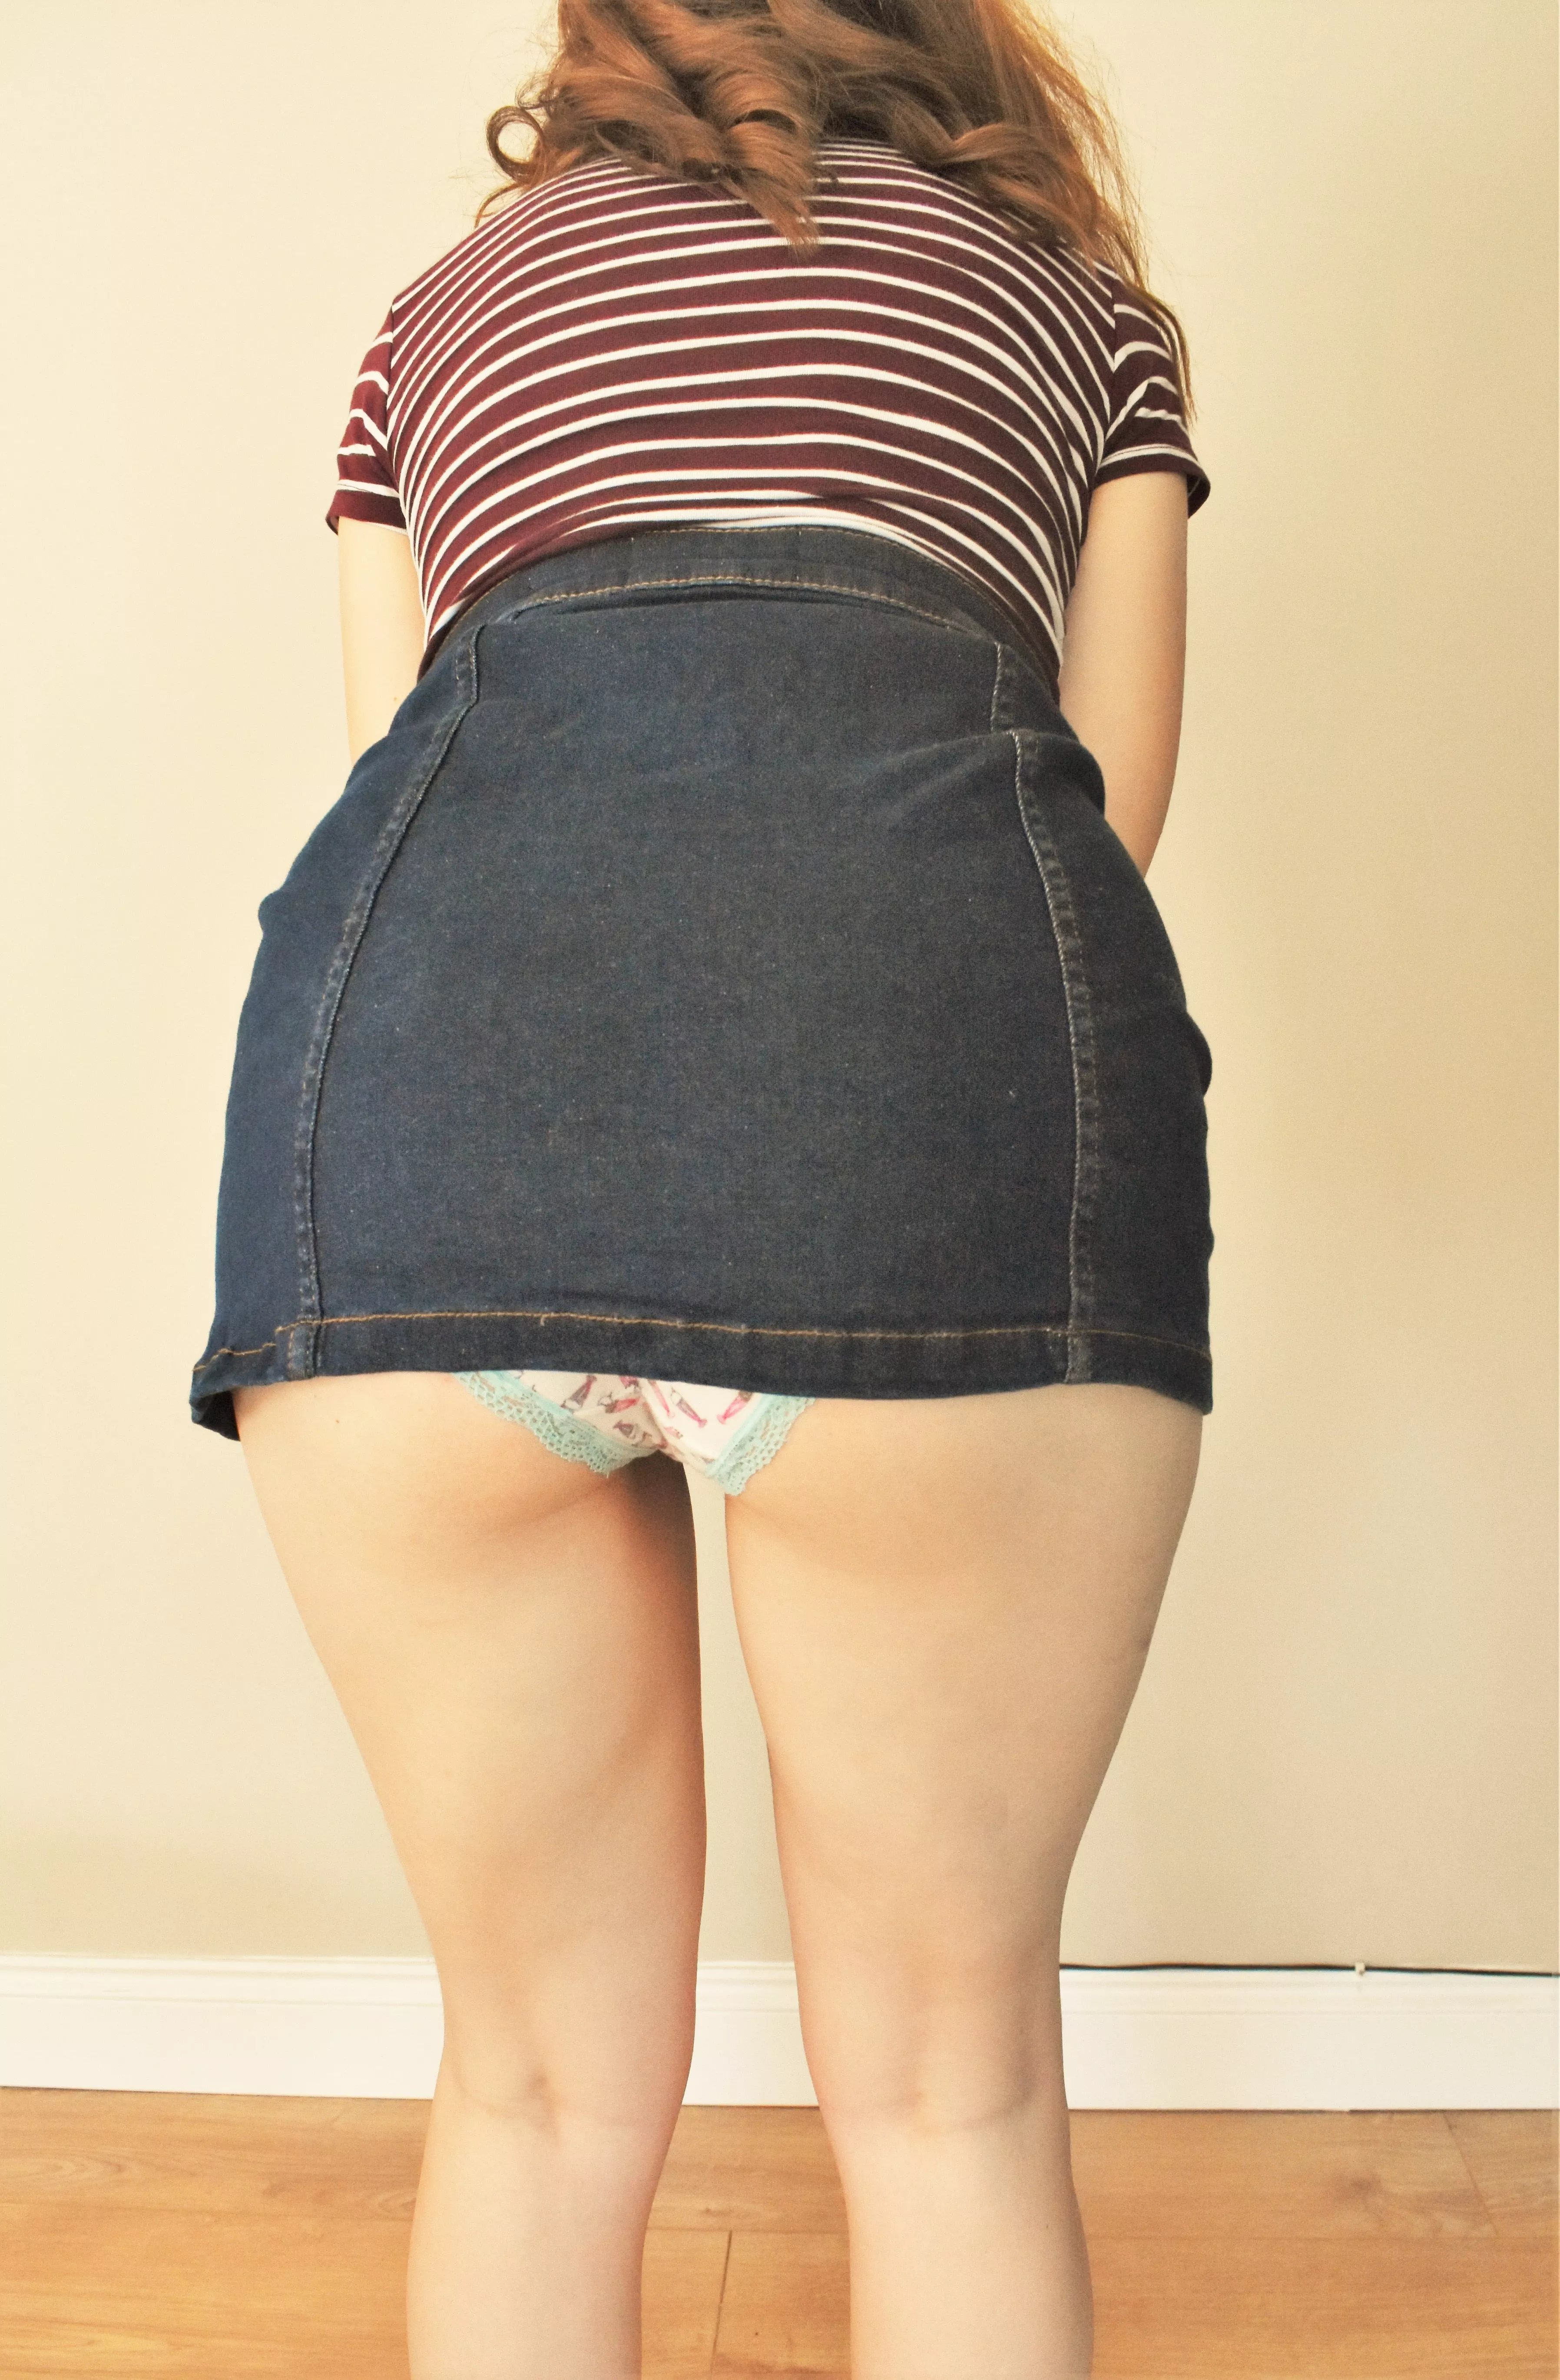 Jeans Skirt Porn